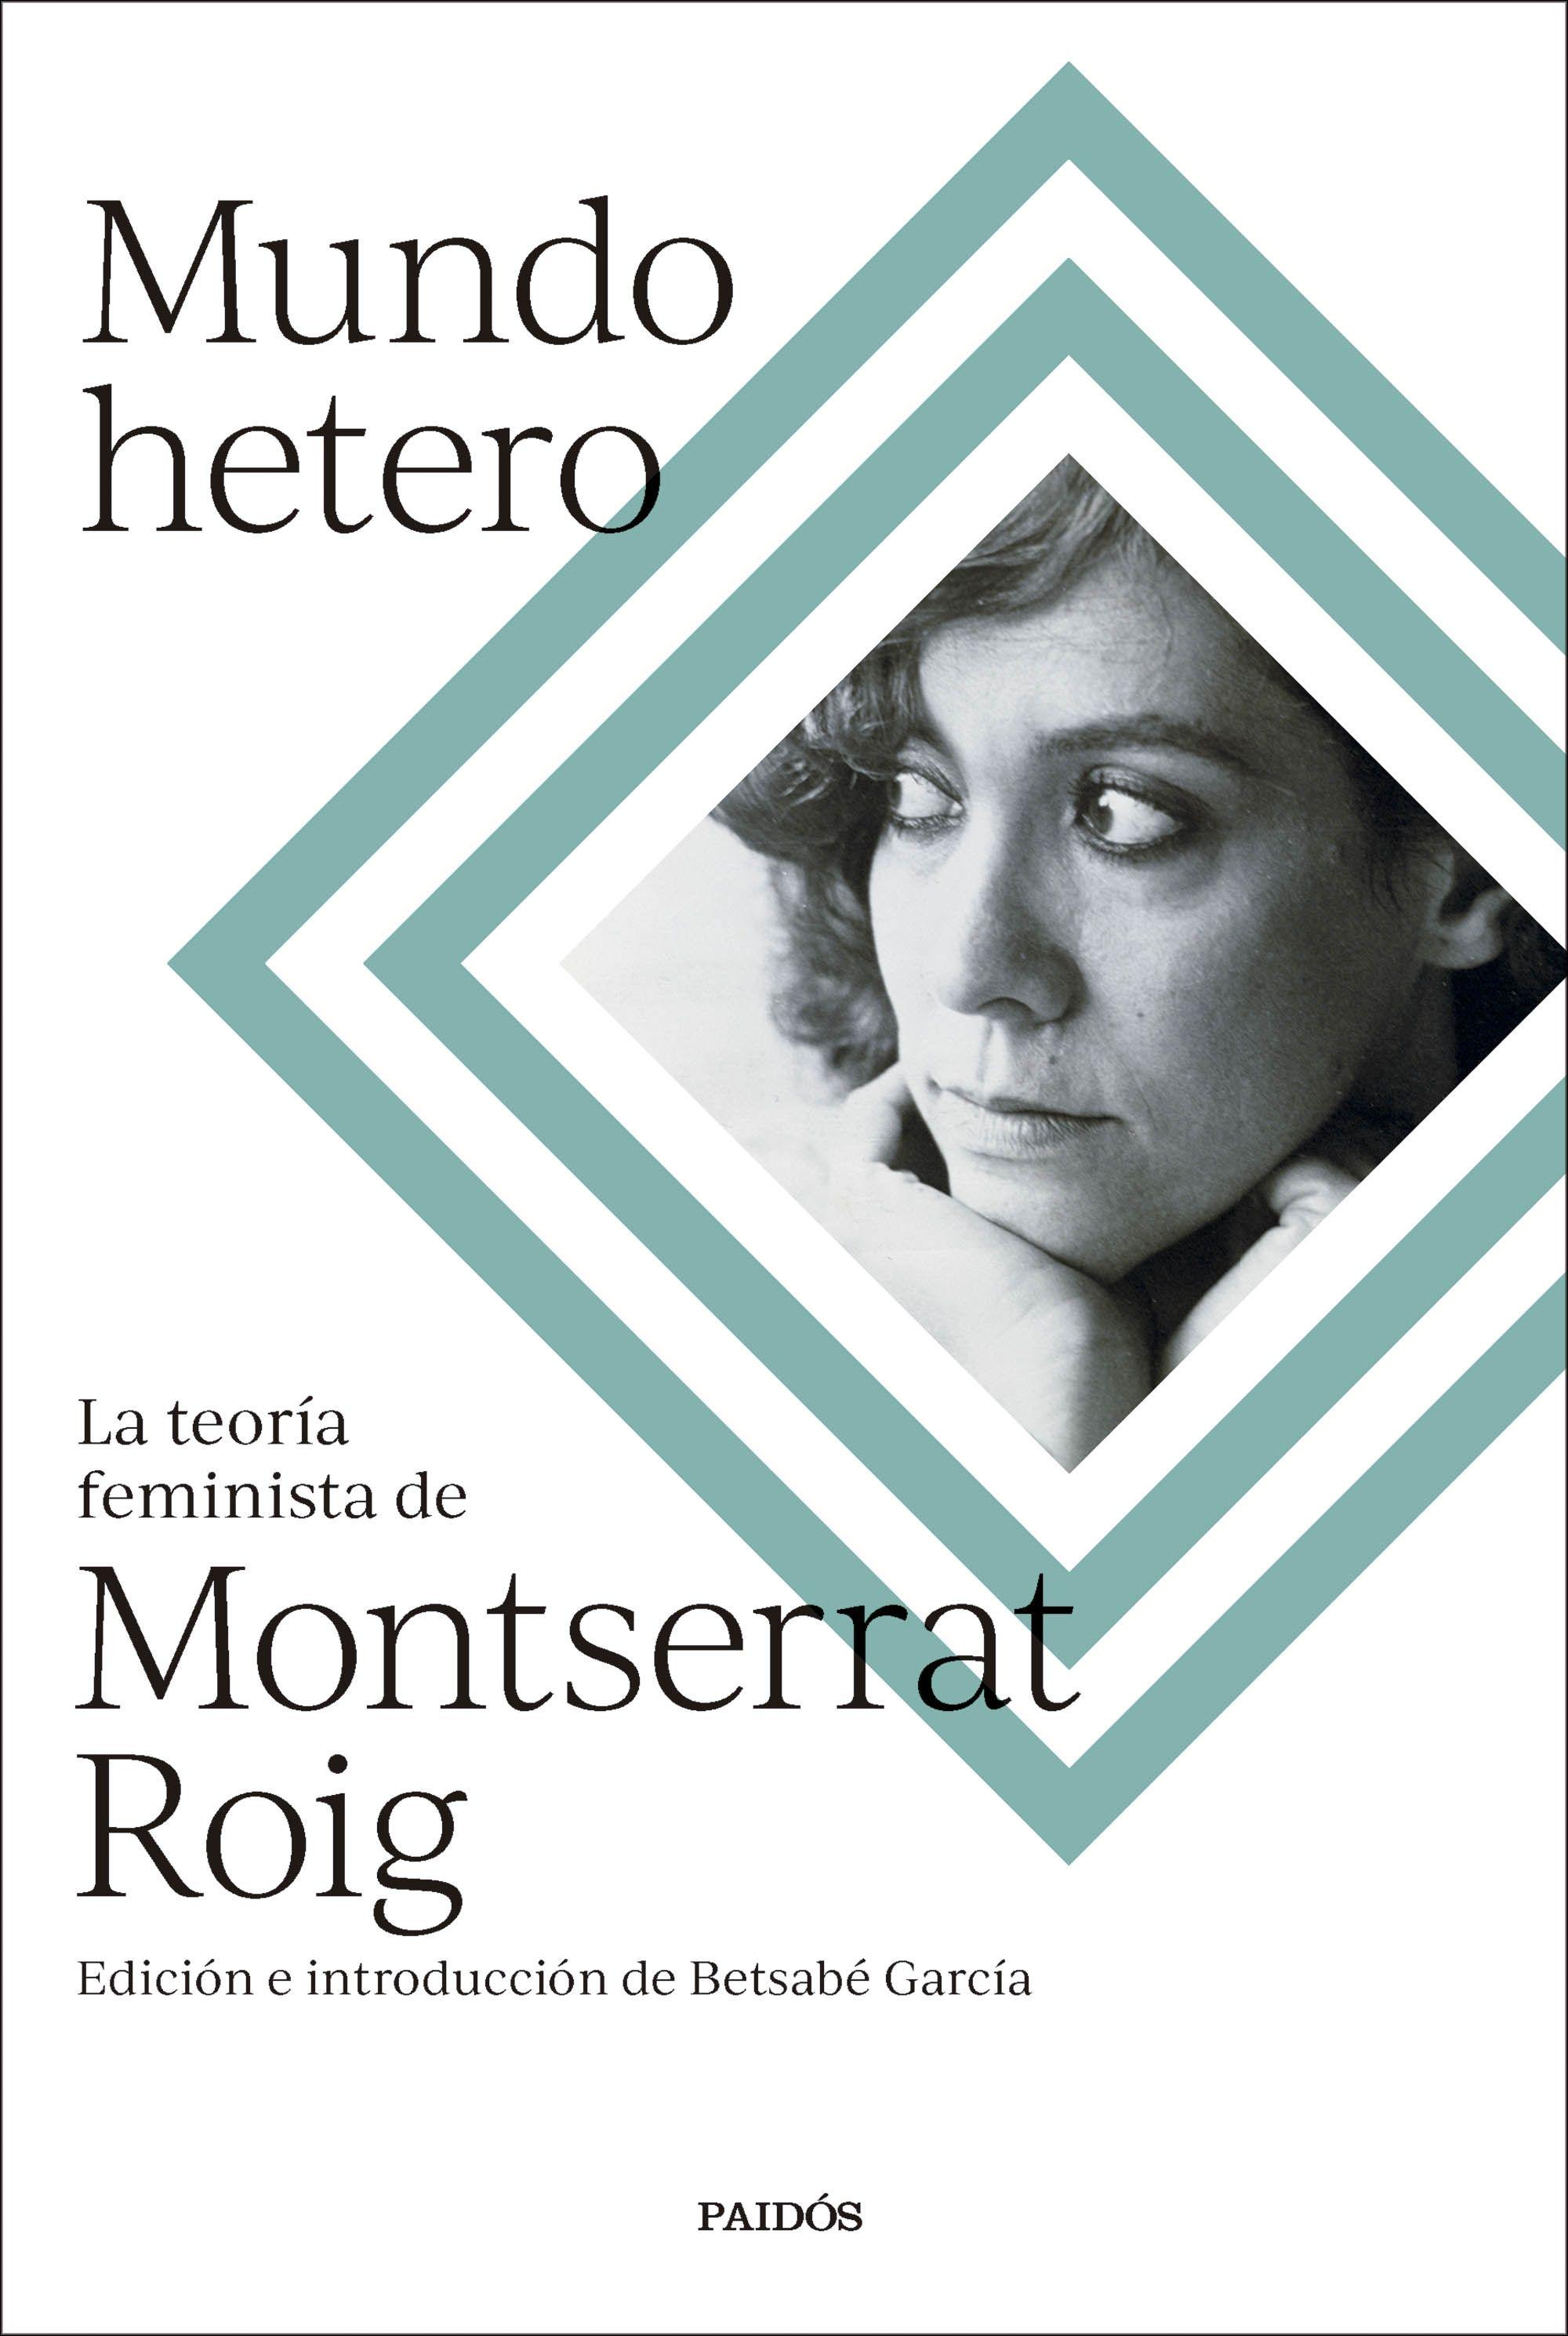 Mundo hetero "La teoría feminista de Montserrat Roig". 